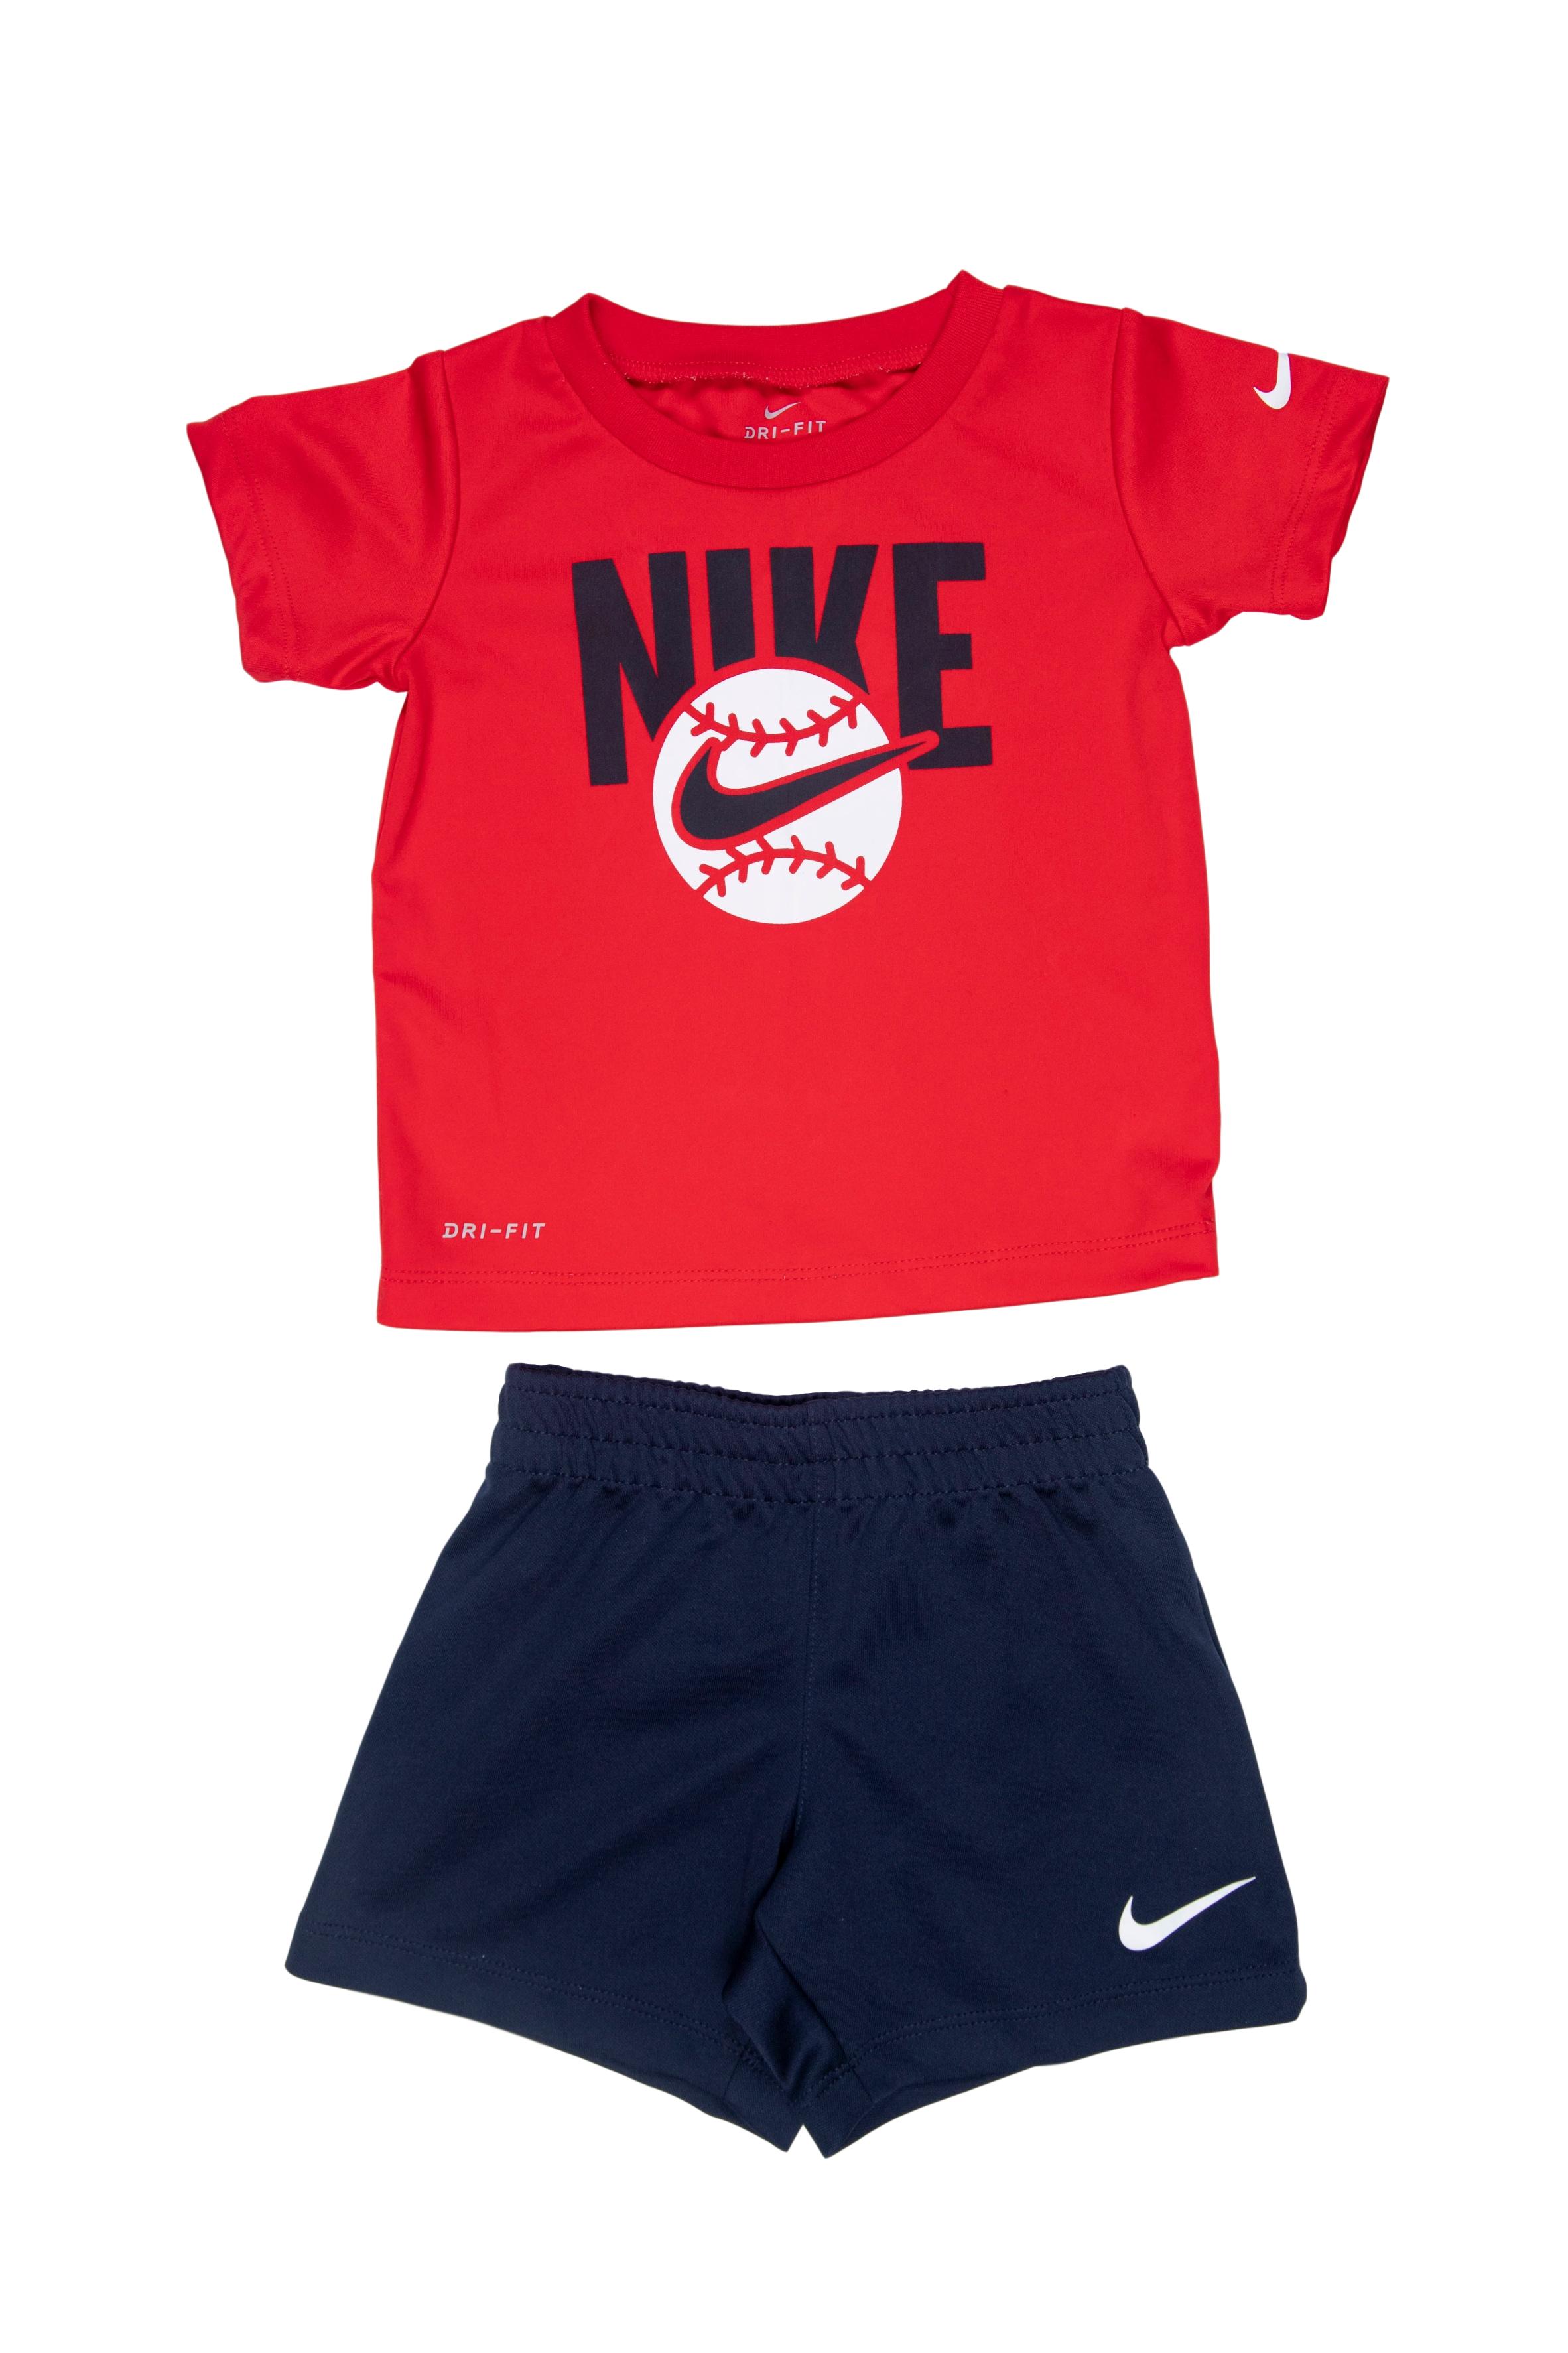 Conjunto Nke Polo rojo tela Dri - Fit y Short azúl marino. - Nike